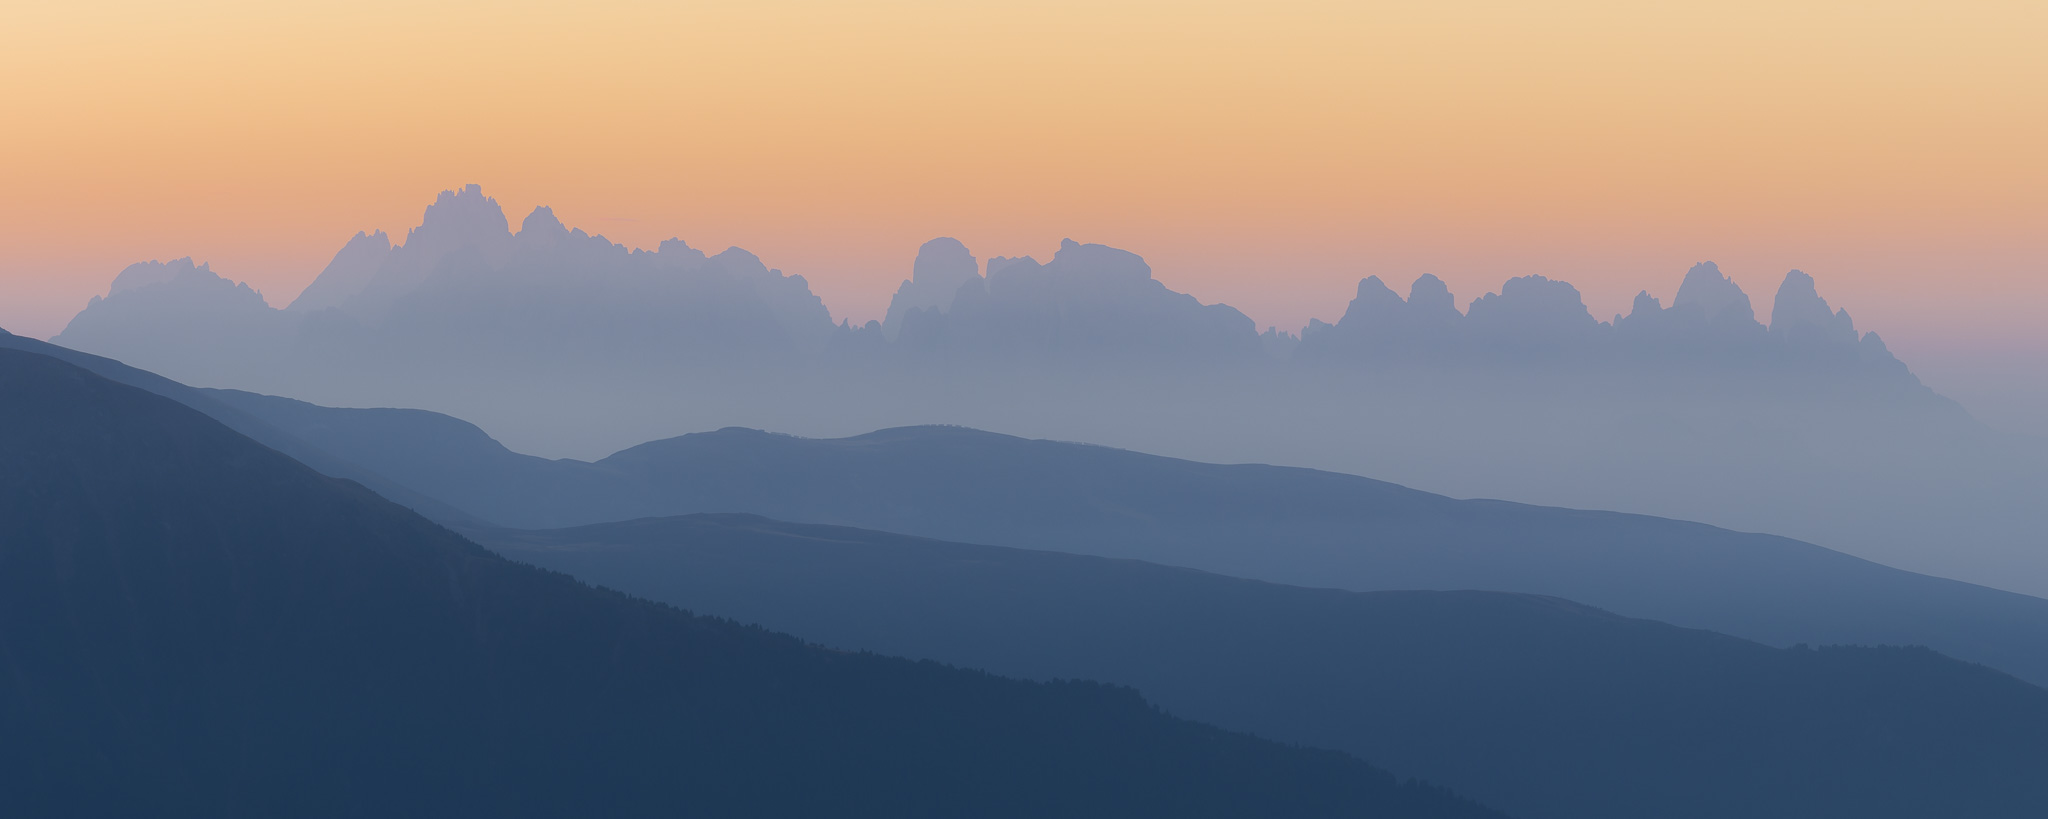 Malerische Bergkettensilhouette bei Sonnenaufgang in den Dolomiten.